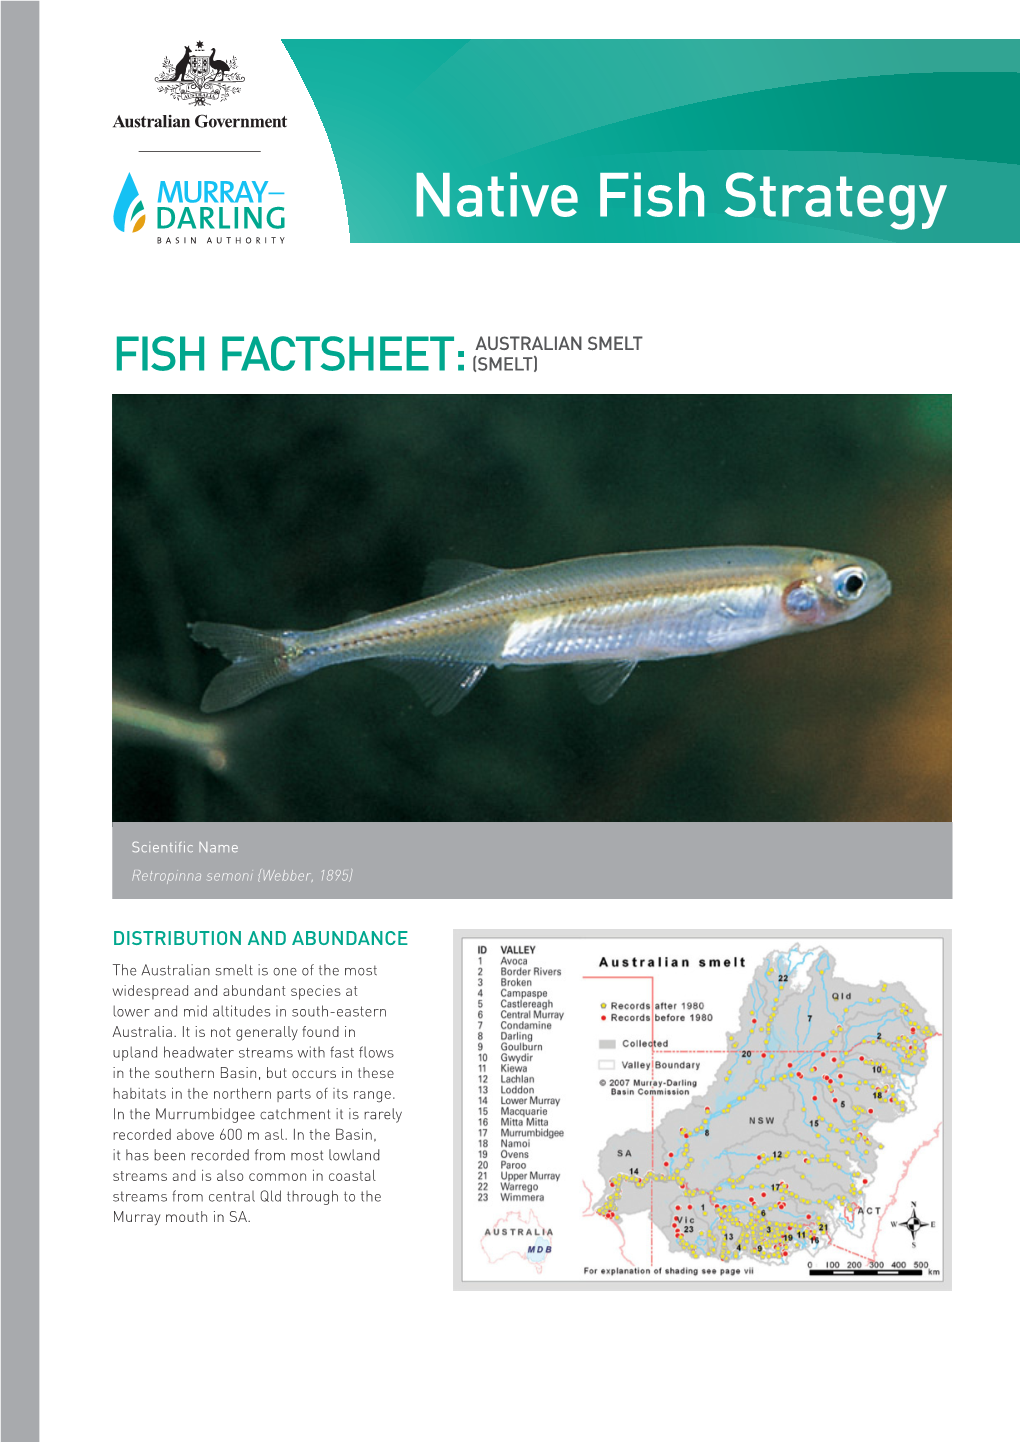 Australian Smelt Fish Factsheet: (Smelt)